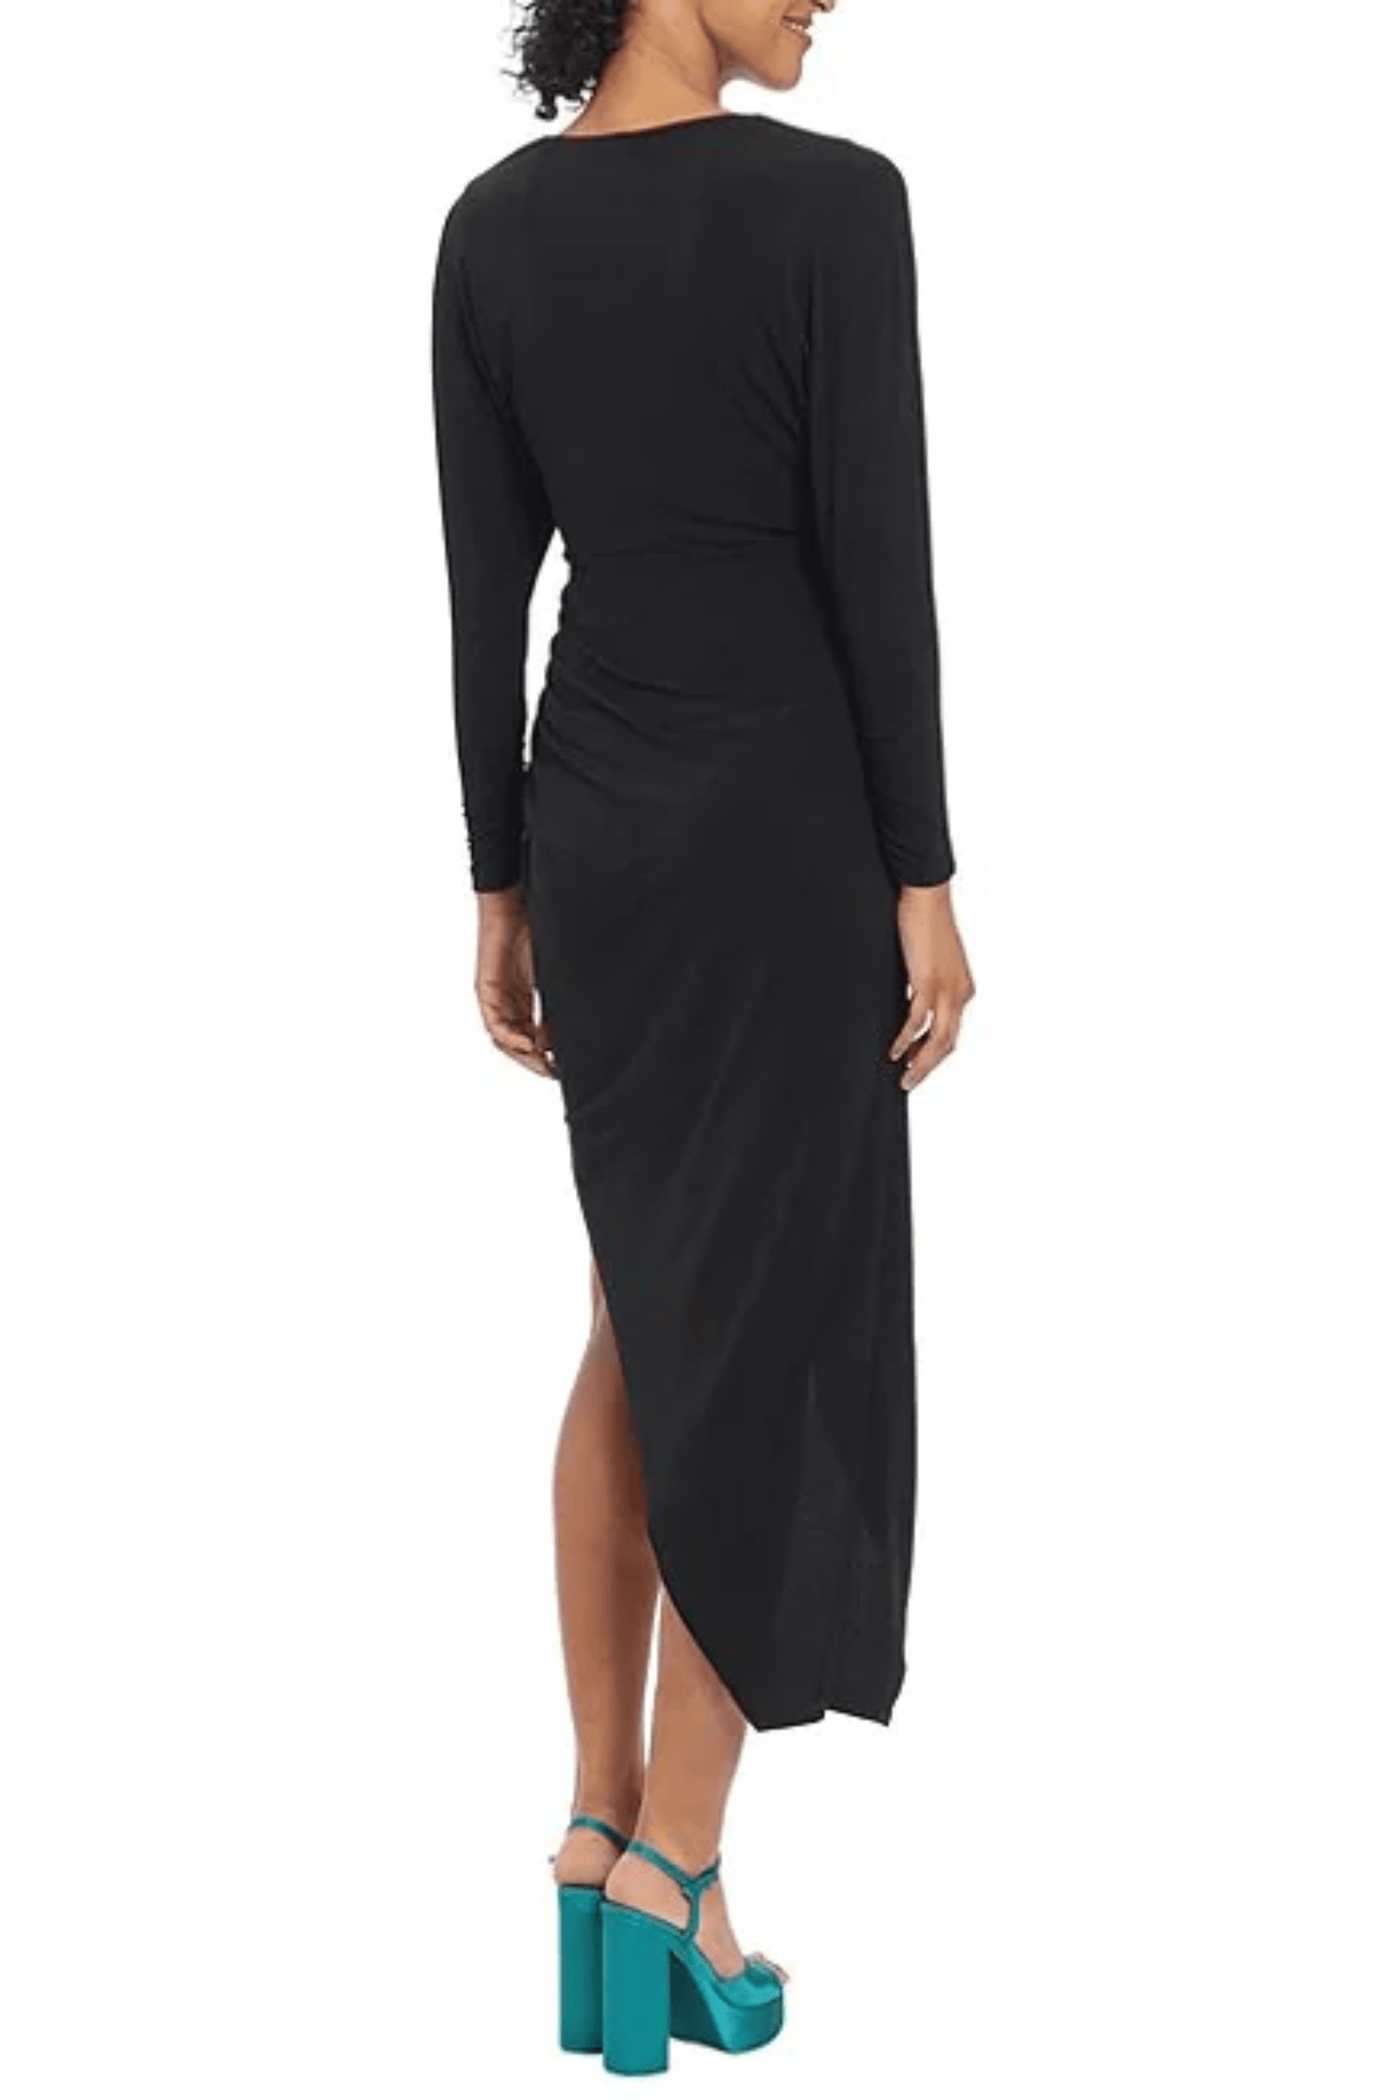 Donna Morgan D8259M - Asymmetric Hem Long Sleeve Evening Dress Special Occasion Dresses